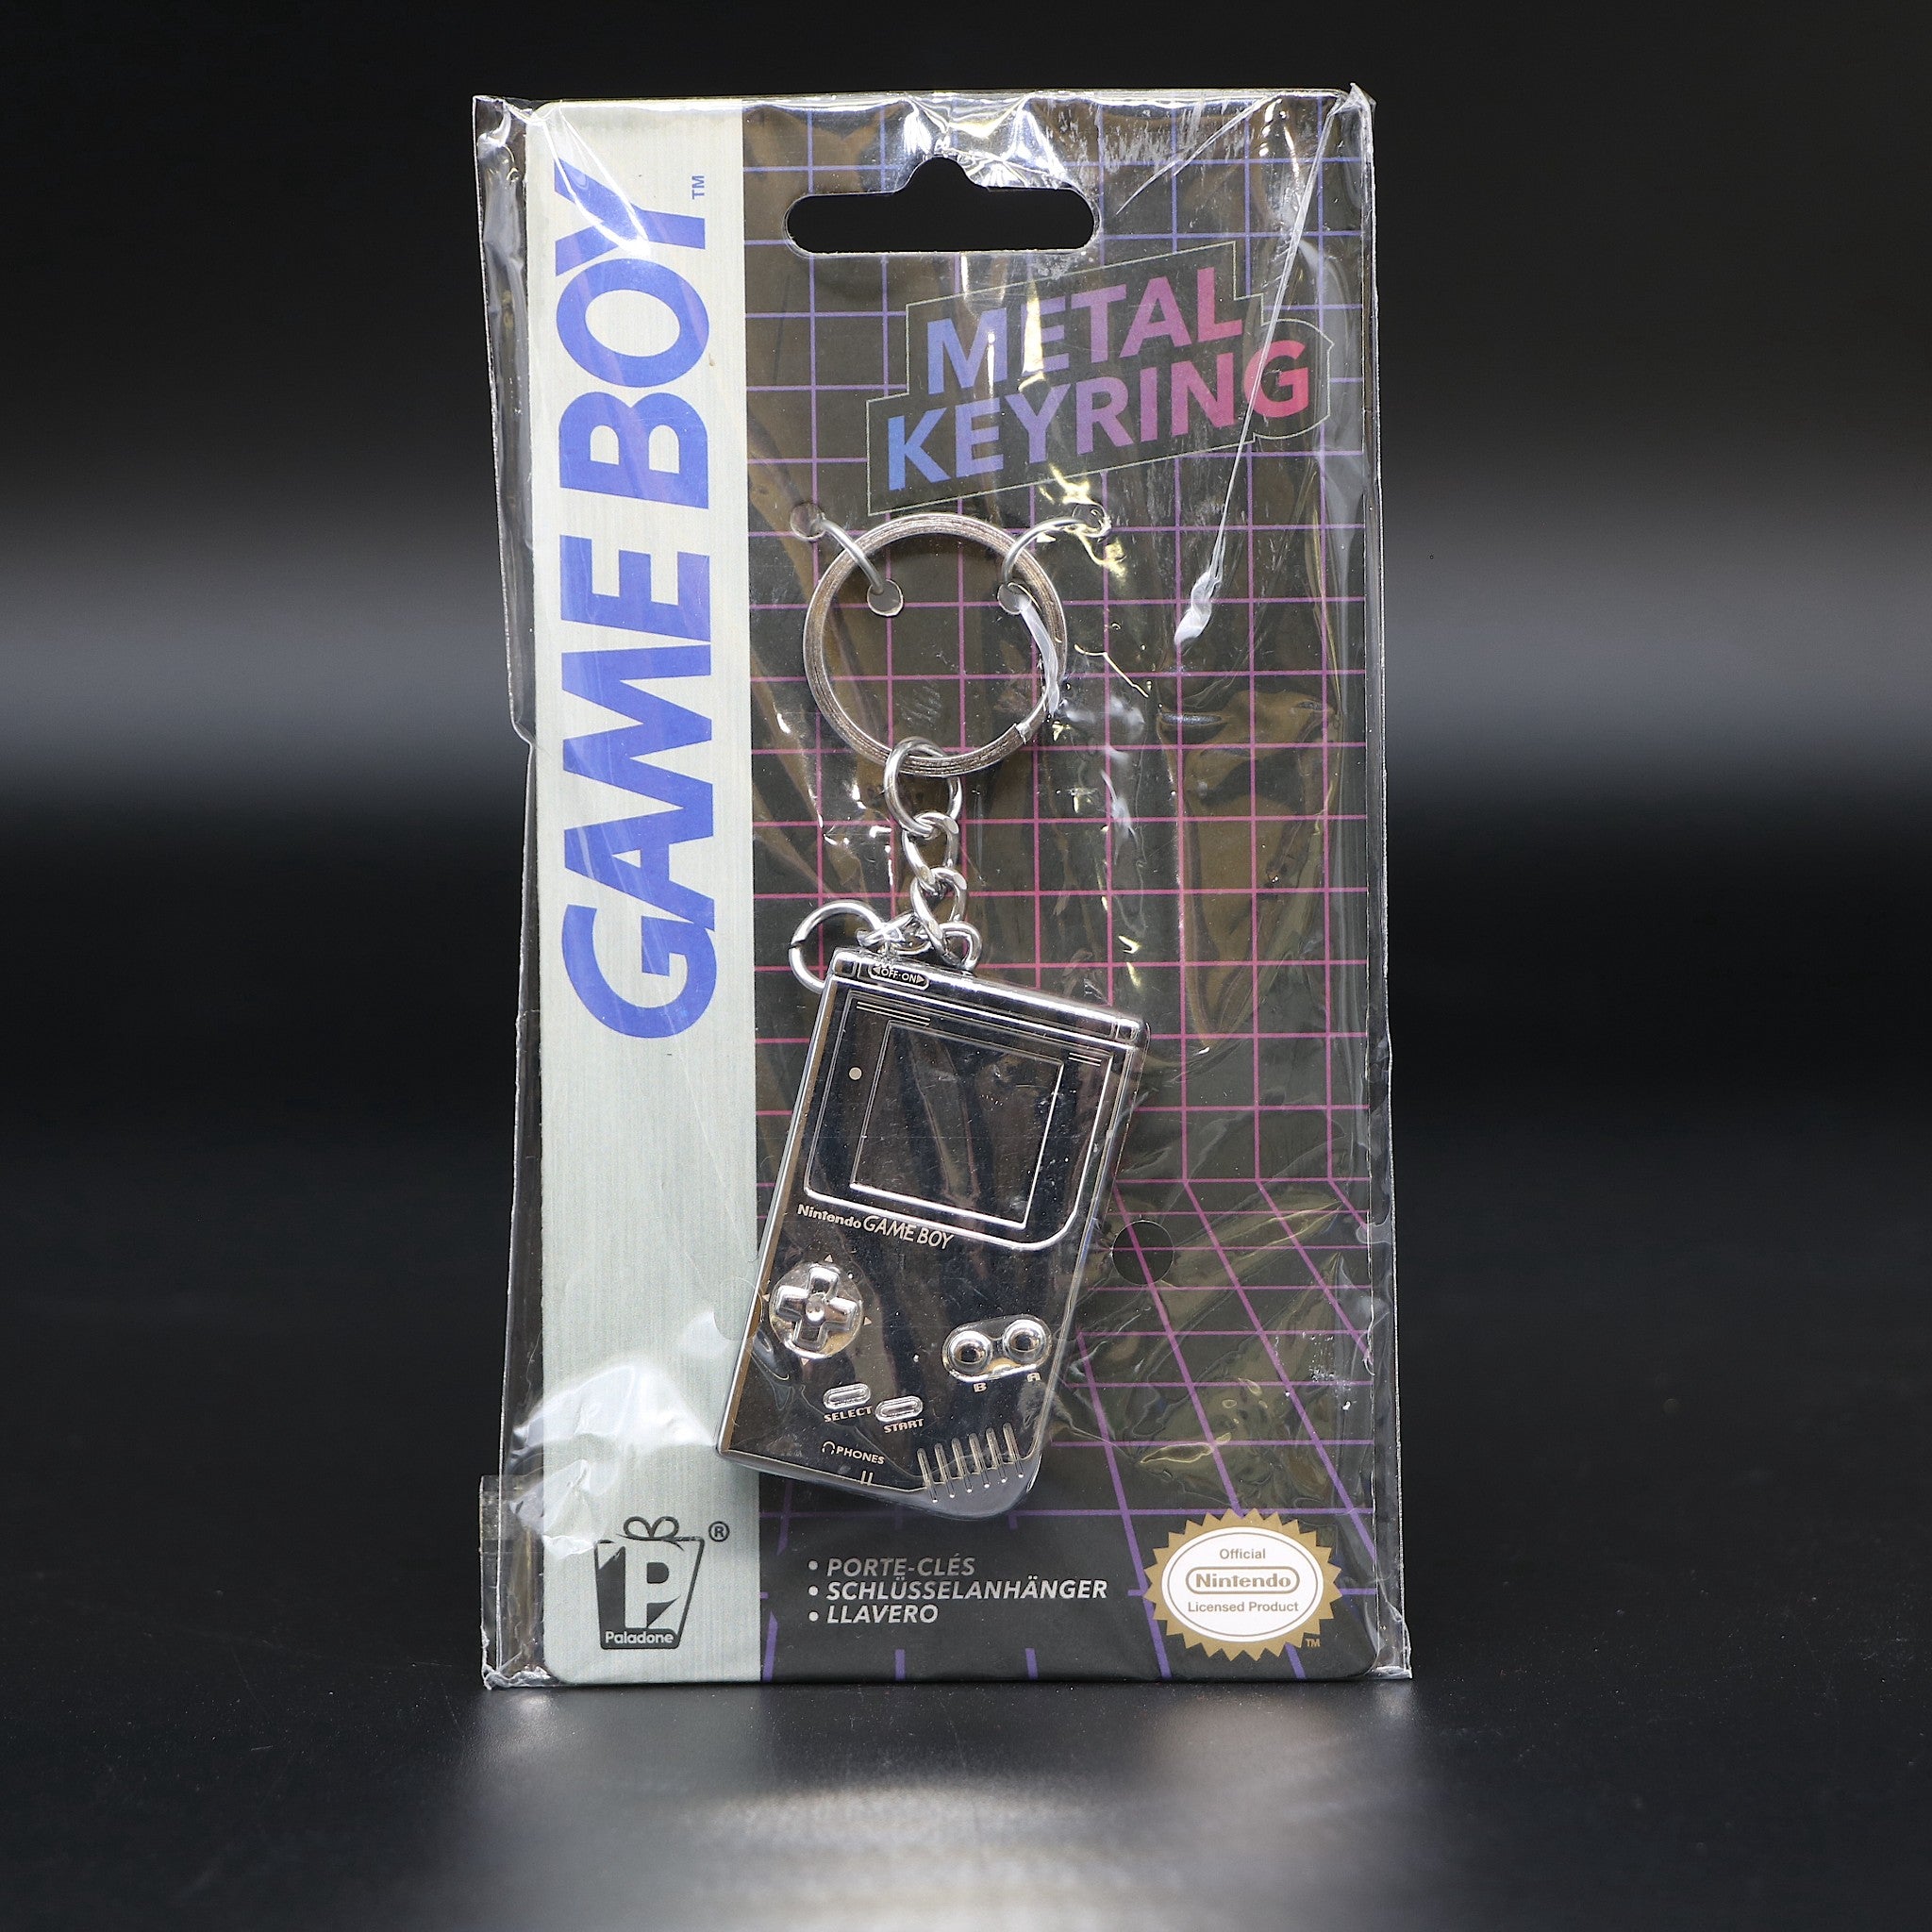 Gameboy Metal Keyring Keychain | Nintendo Console Game | Xmas Gift Stocking